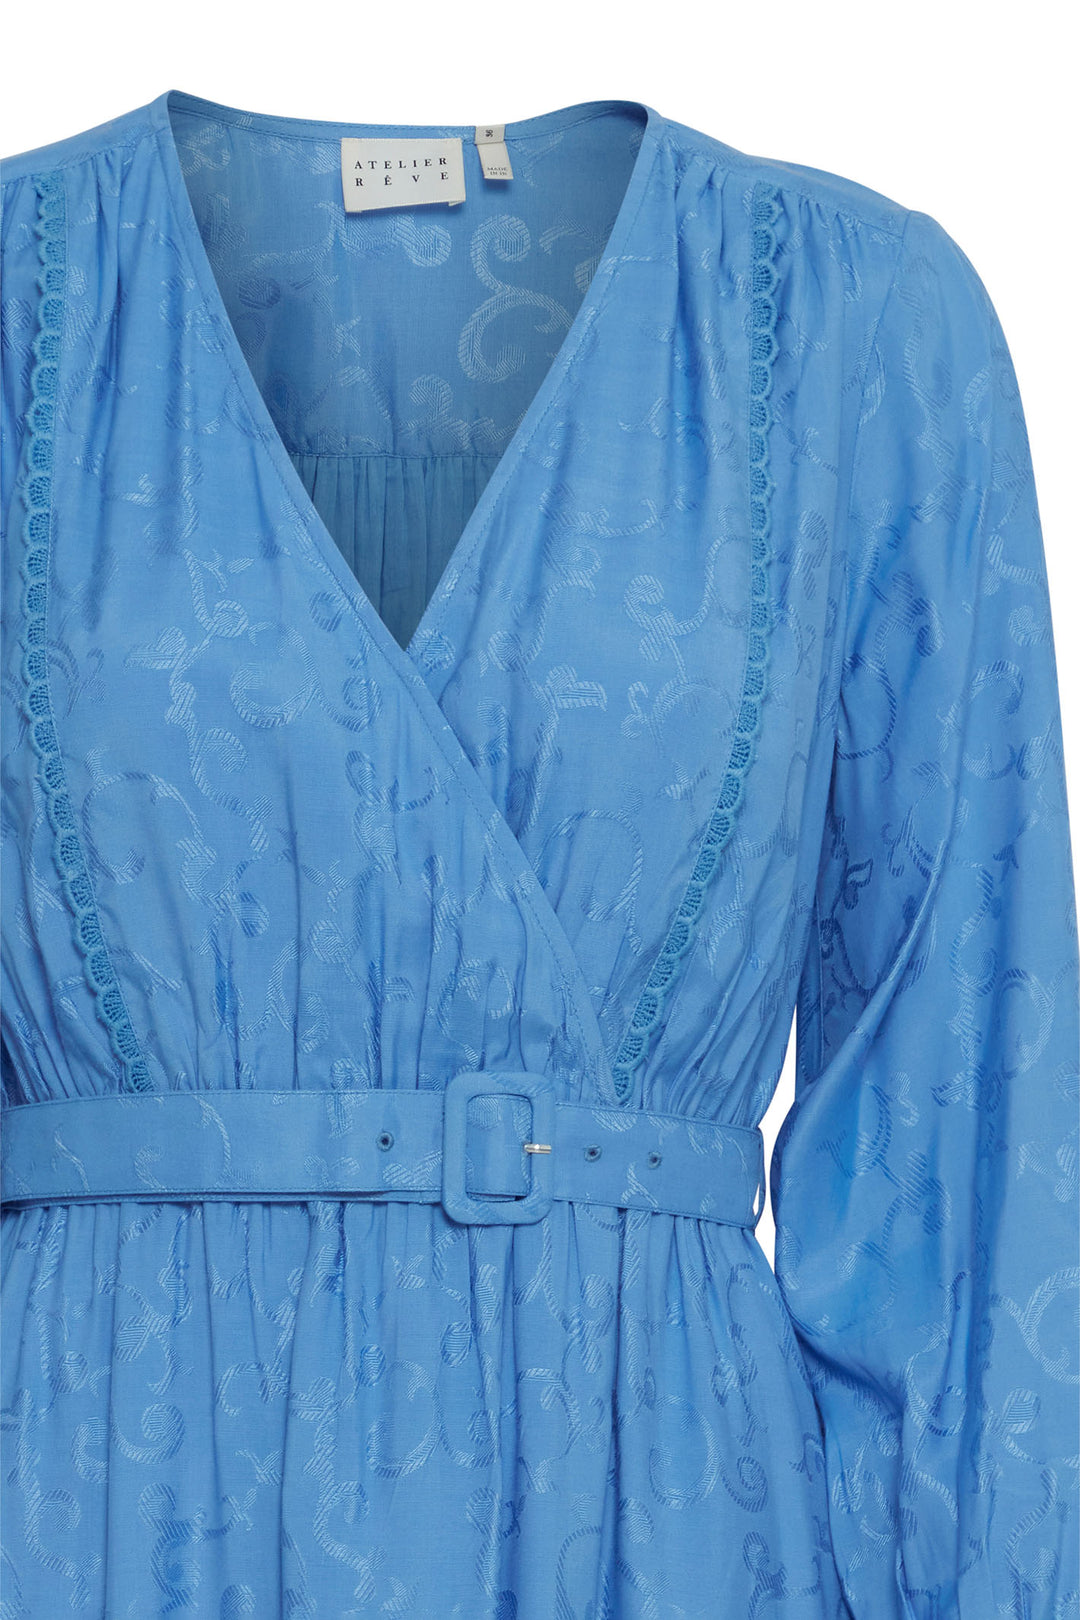 Atelier Reve 20120200 IRLOWLY Marina Blue Long Sleeve Dress - Dotique Chesterfield